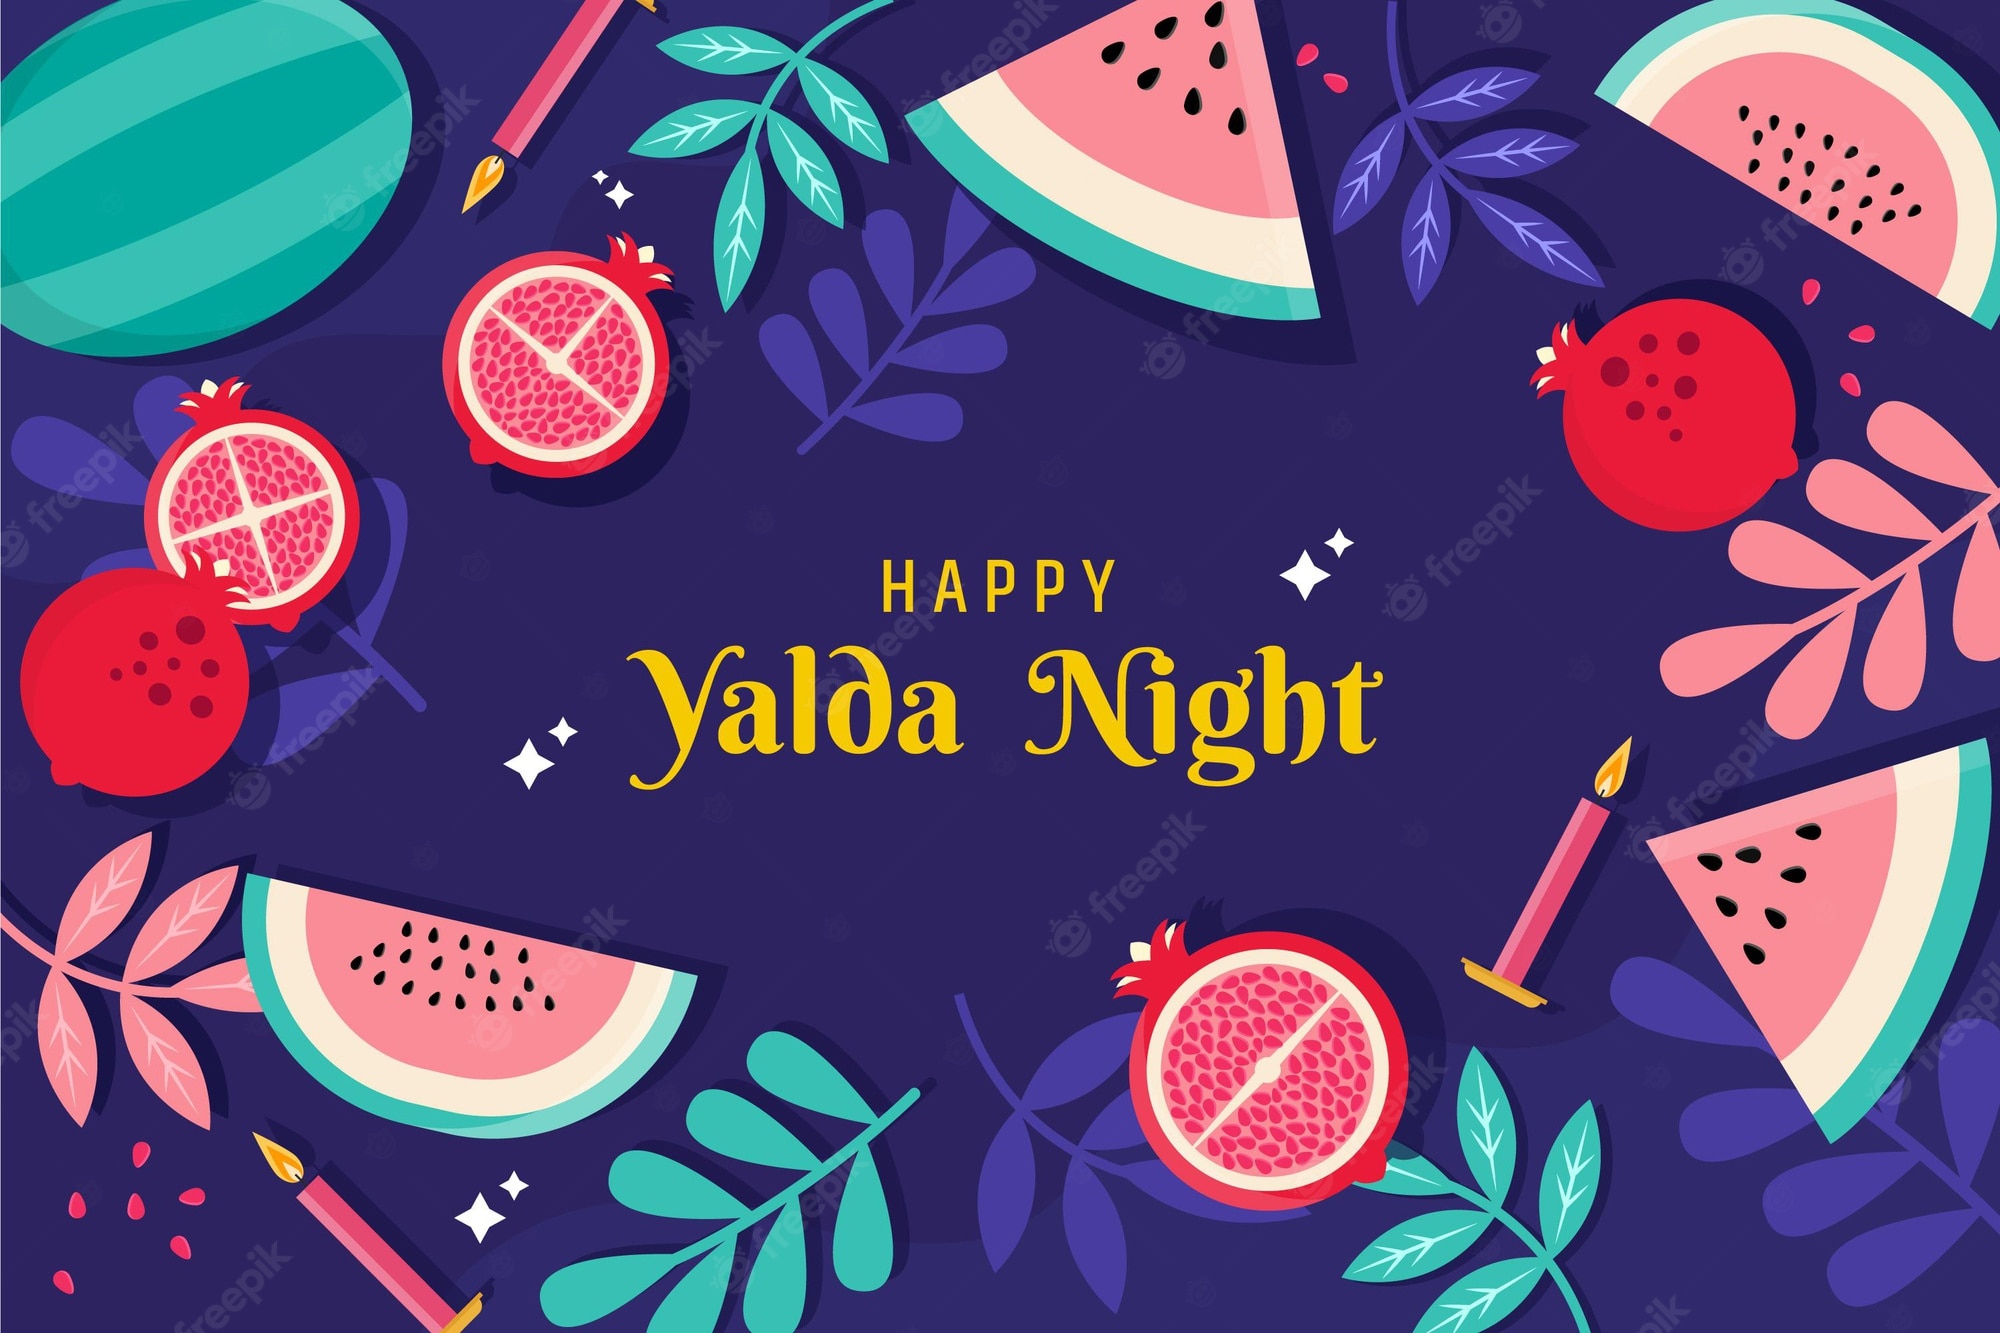 Yalda Night Image. Free Vectors, & PSD